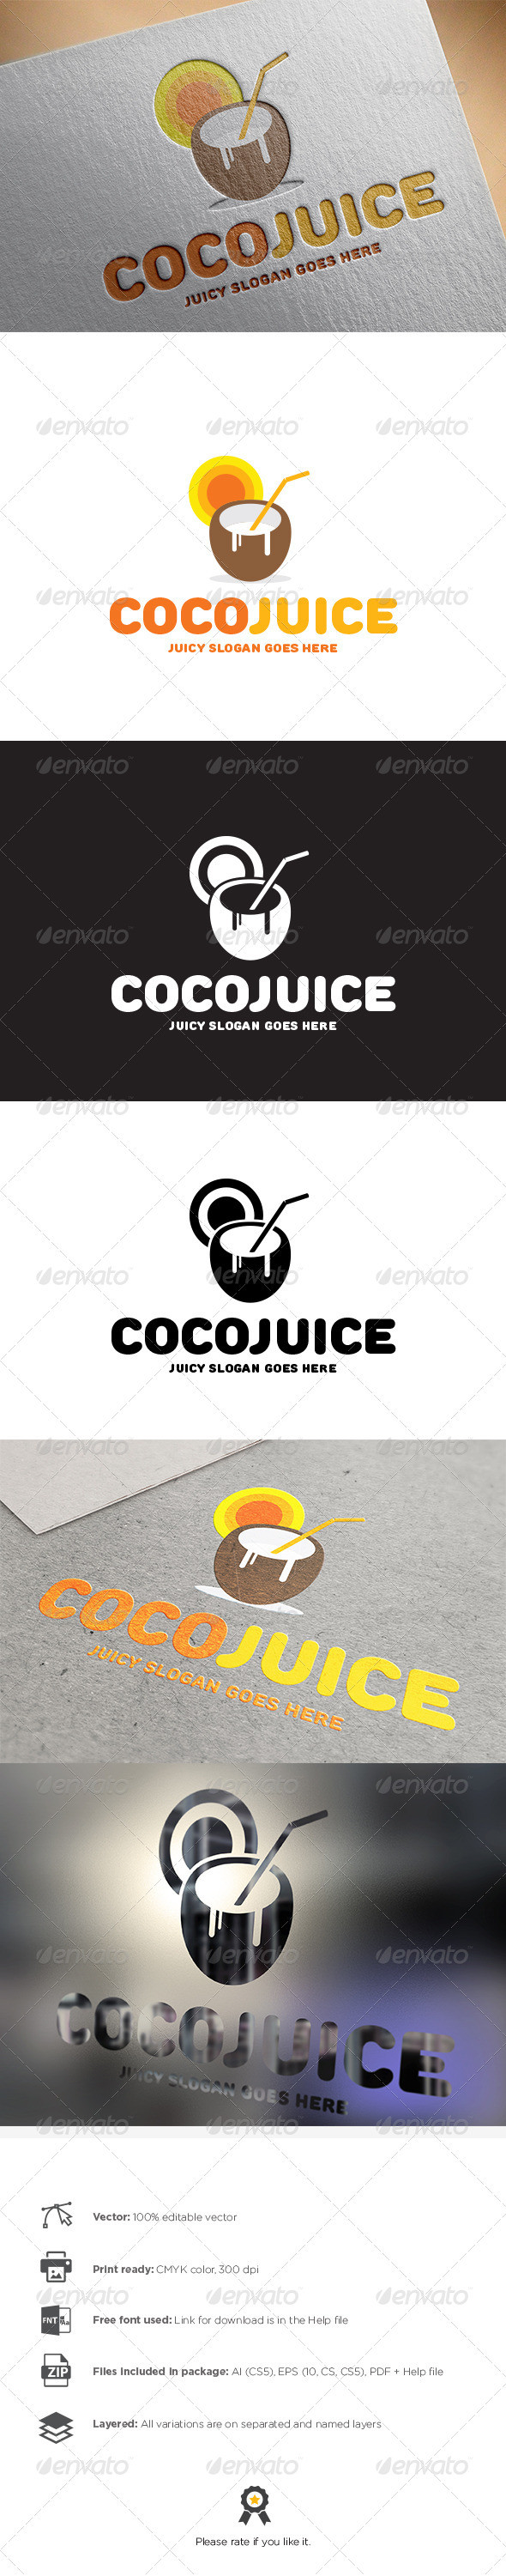 Coco juice logo preview